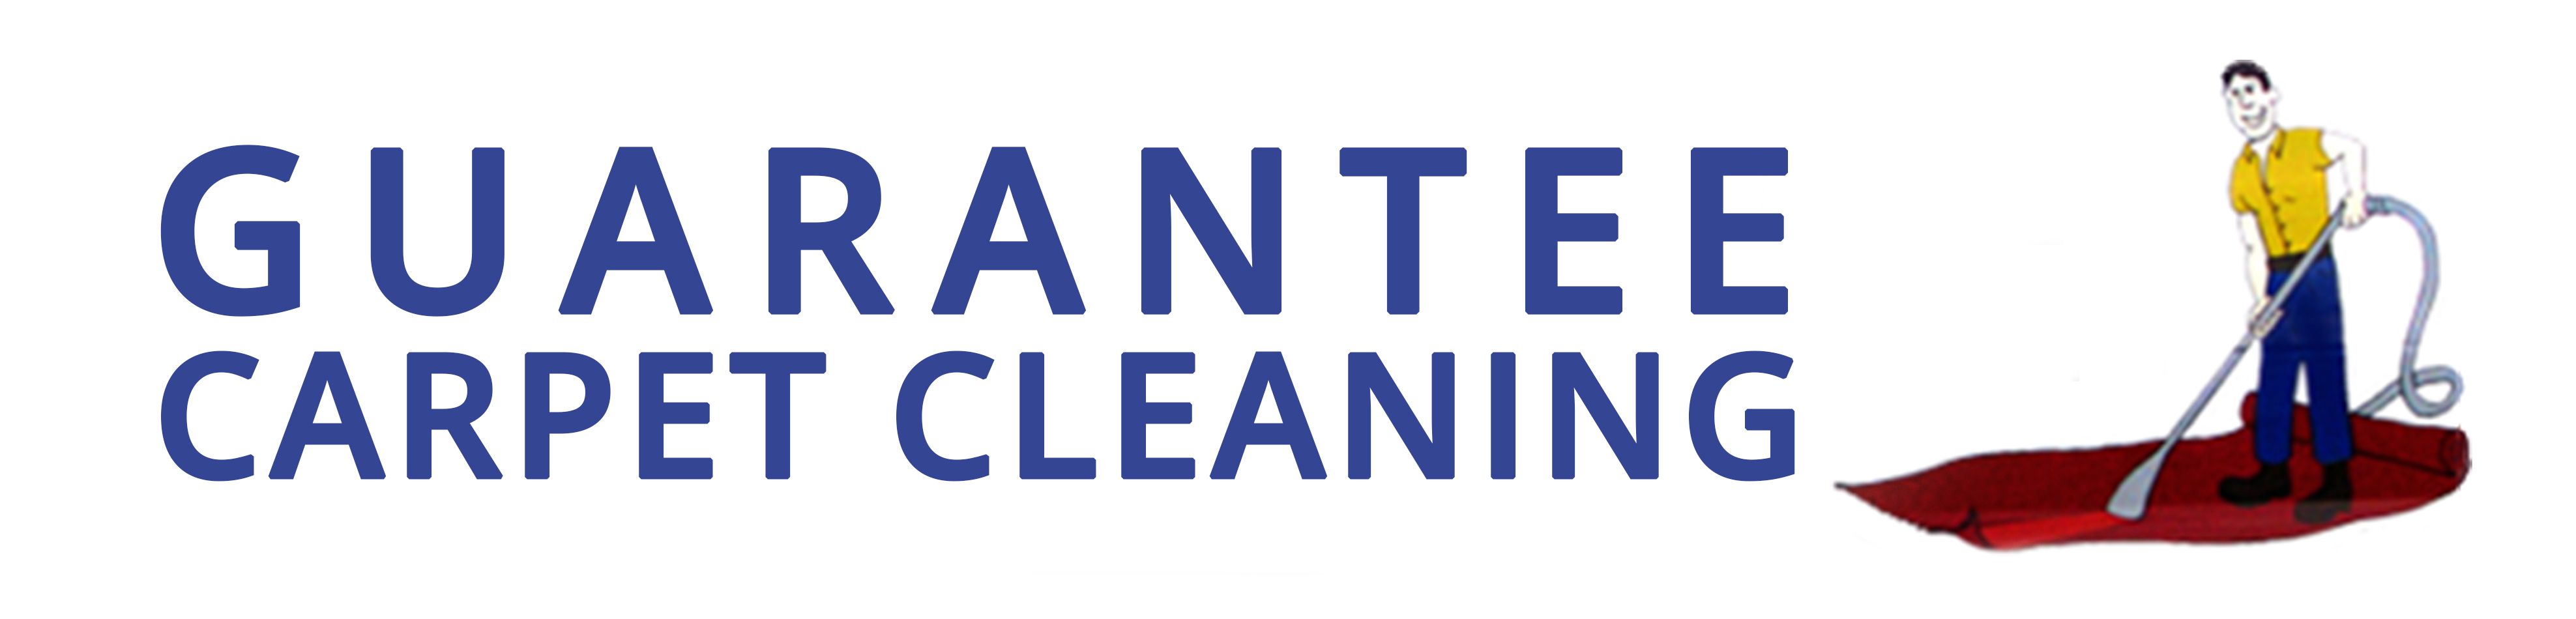 Guarantee Carpet Cleaning